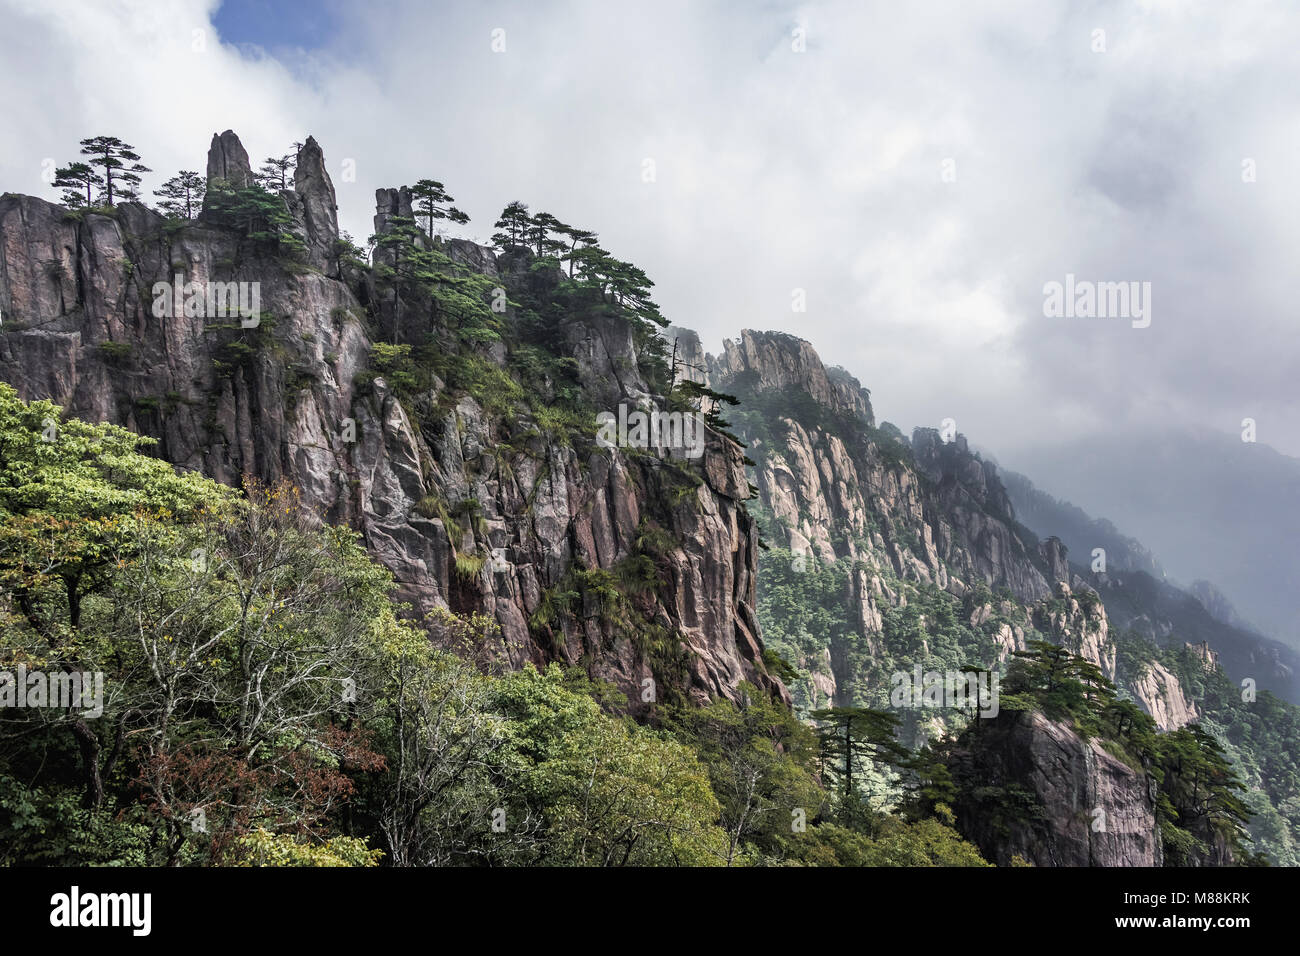 Granite cliffs, pines (Pinus hwangshanensis) and rhododendrons, Huangshan Mountains, China Stock Photo